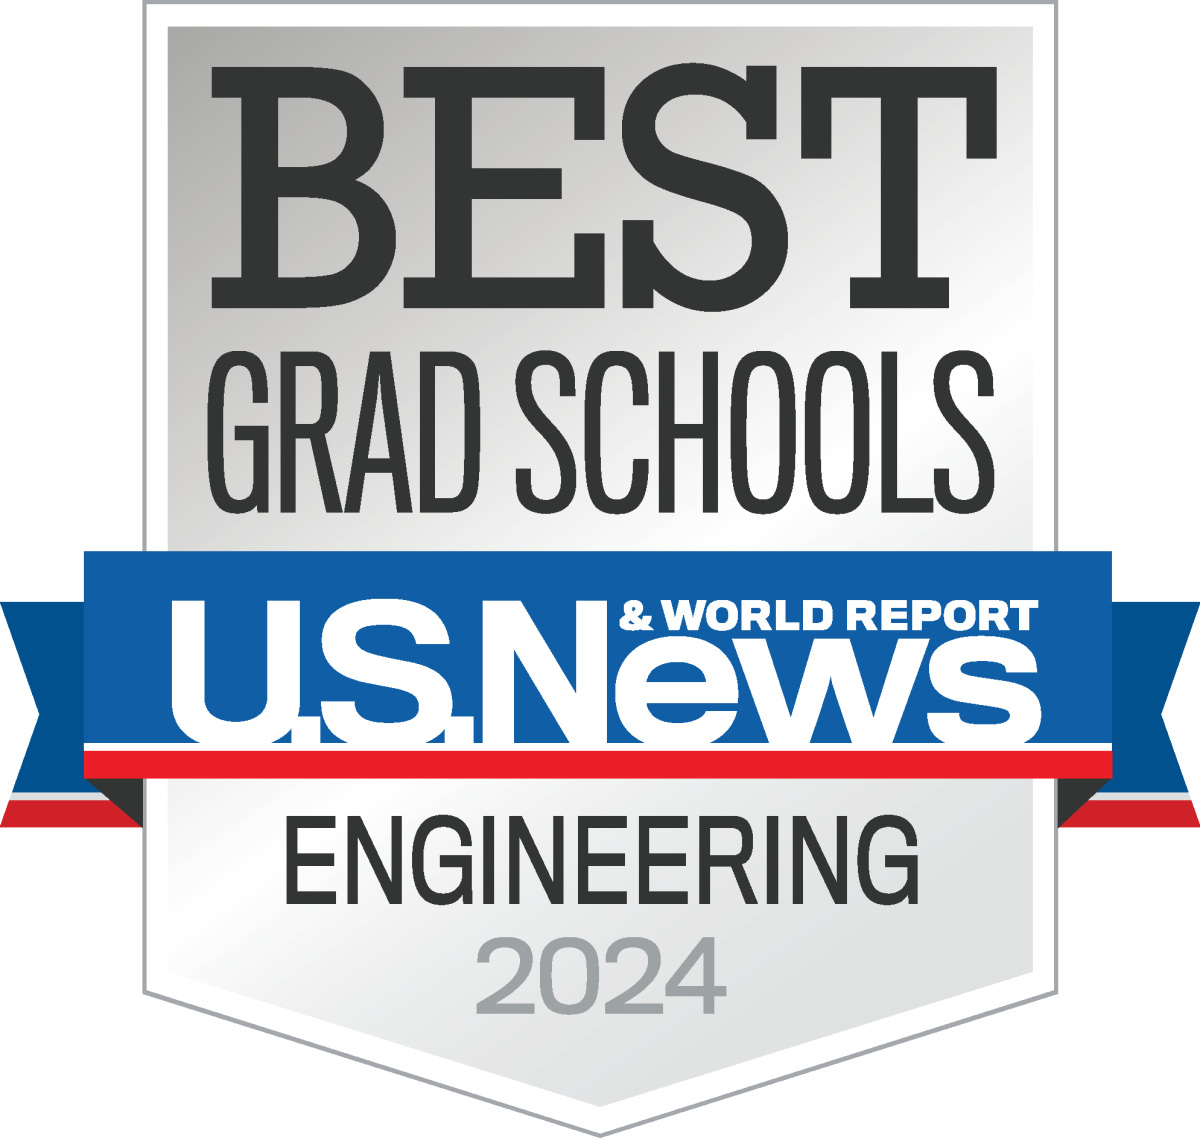 Best Grad Schools U.S. News & World Report - Engineering 2024